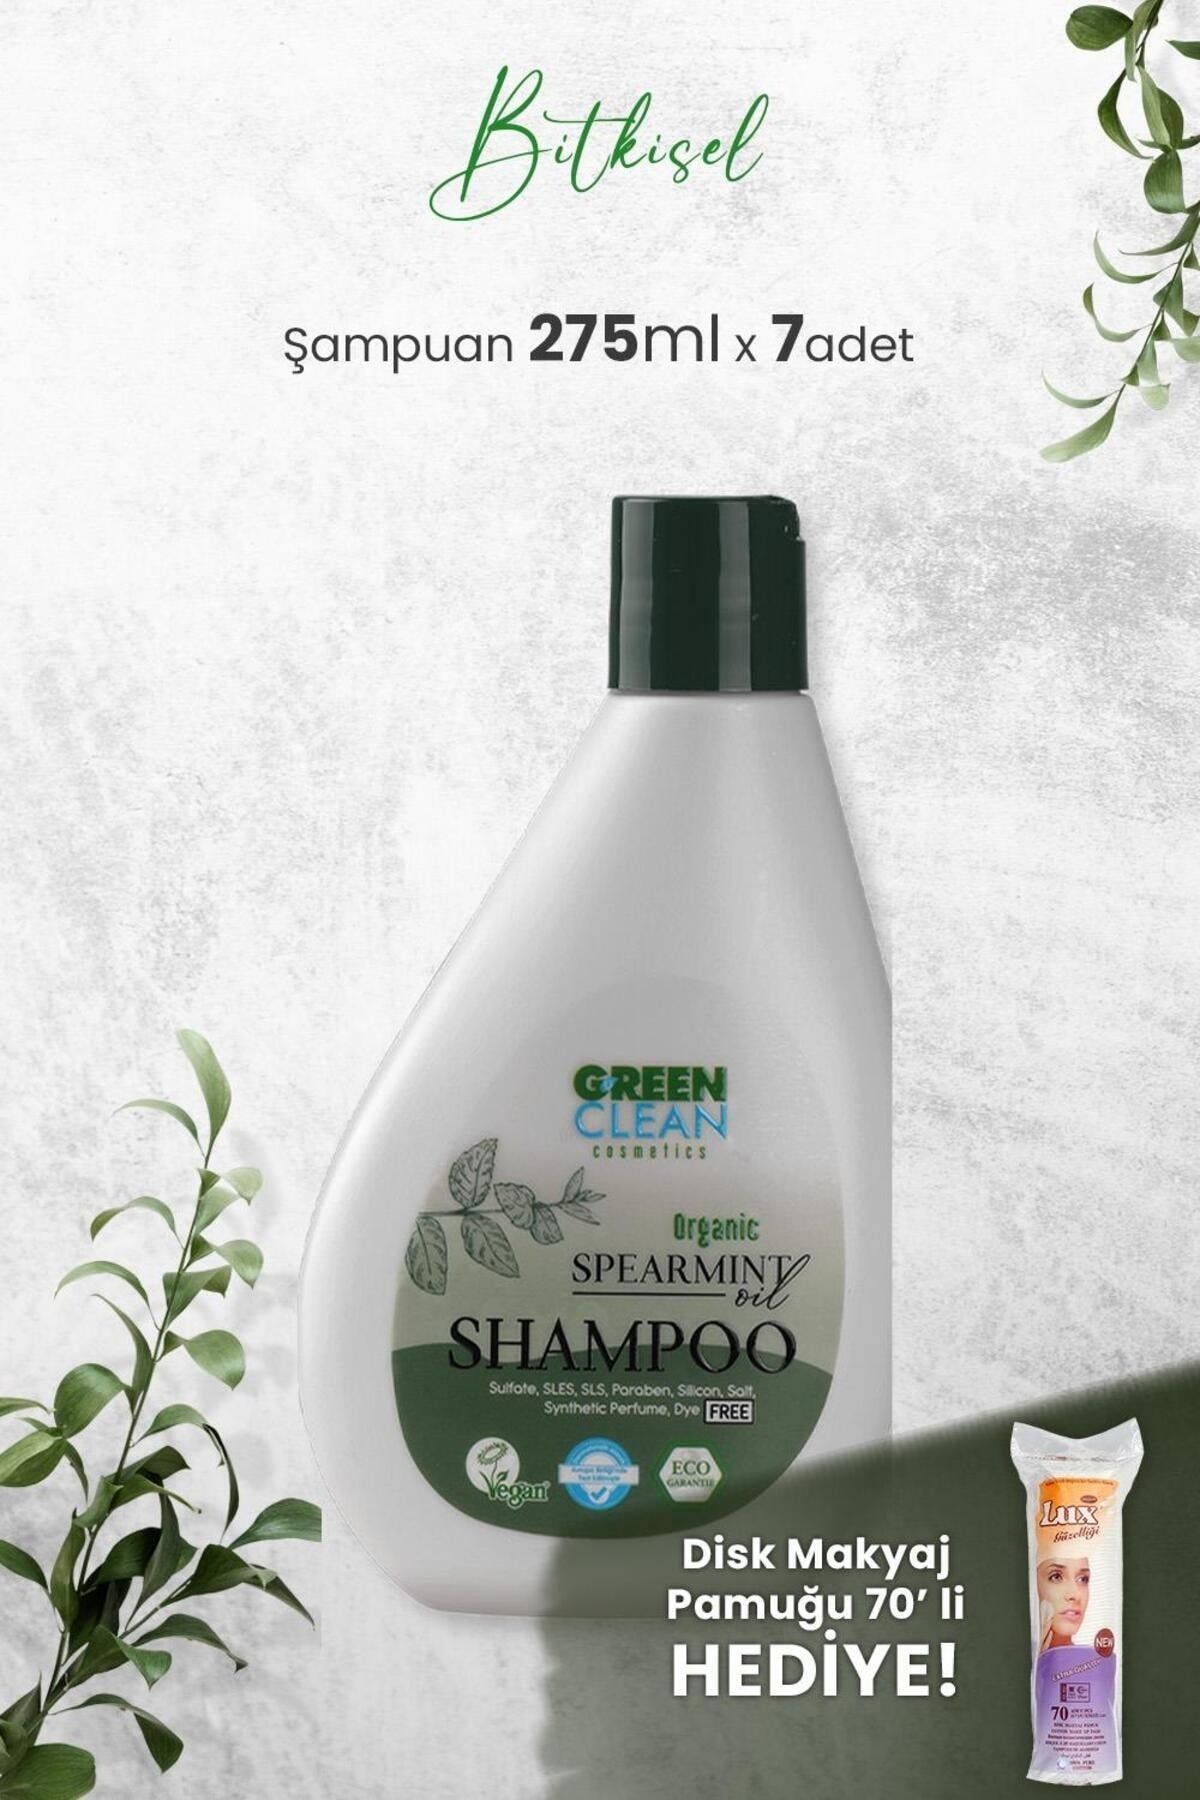 Green Clean Şampuan Spearmint 275 ml x 7 Adet ve Hediyeli